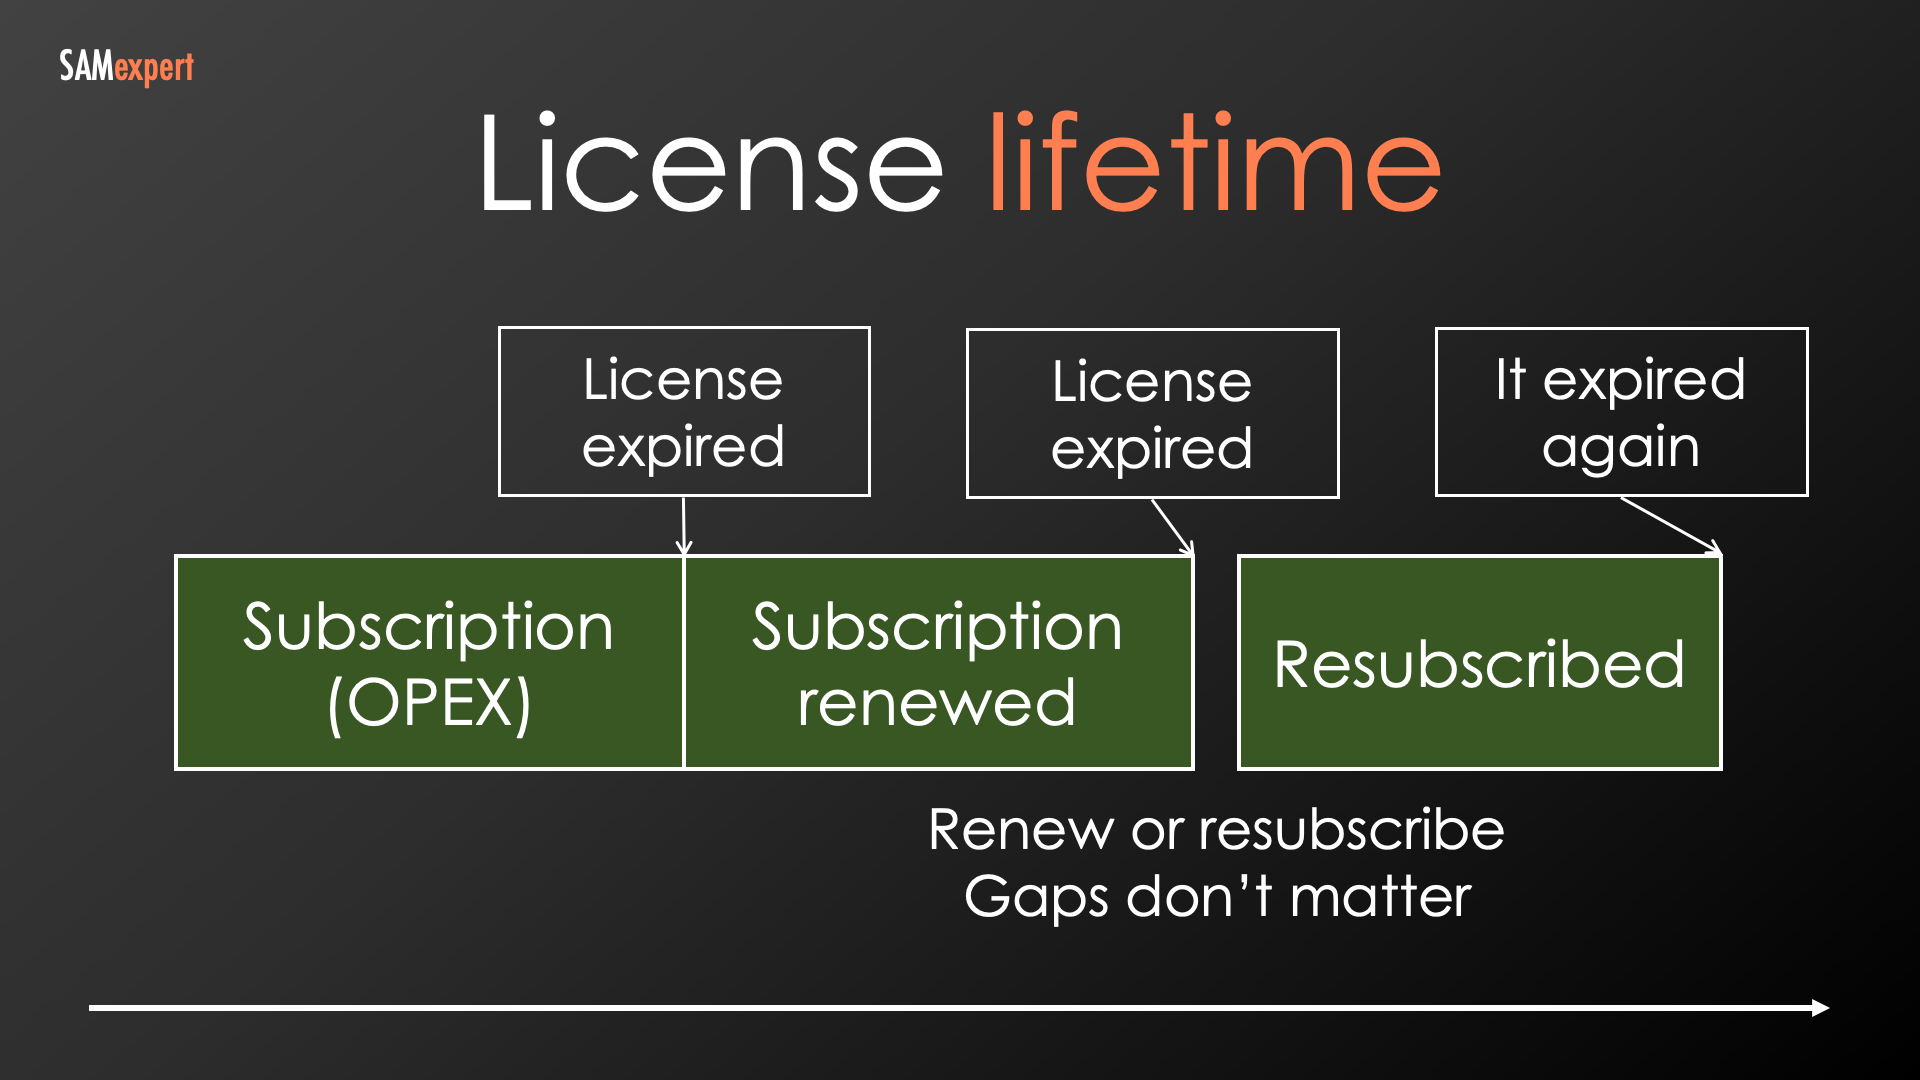 Microsoft subscription license lifetime